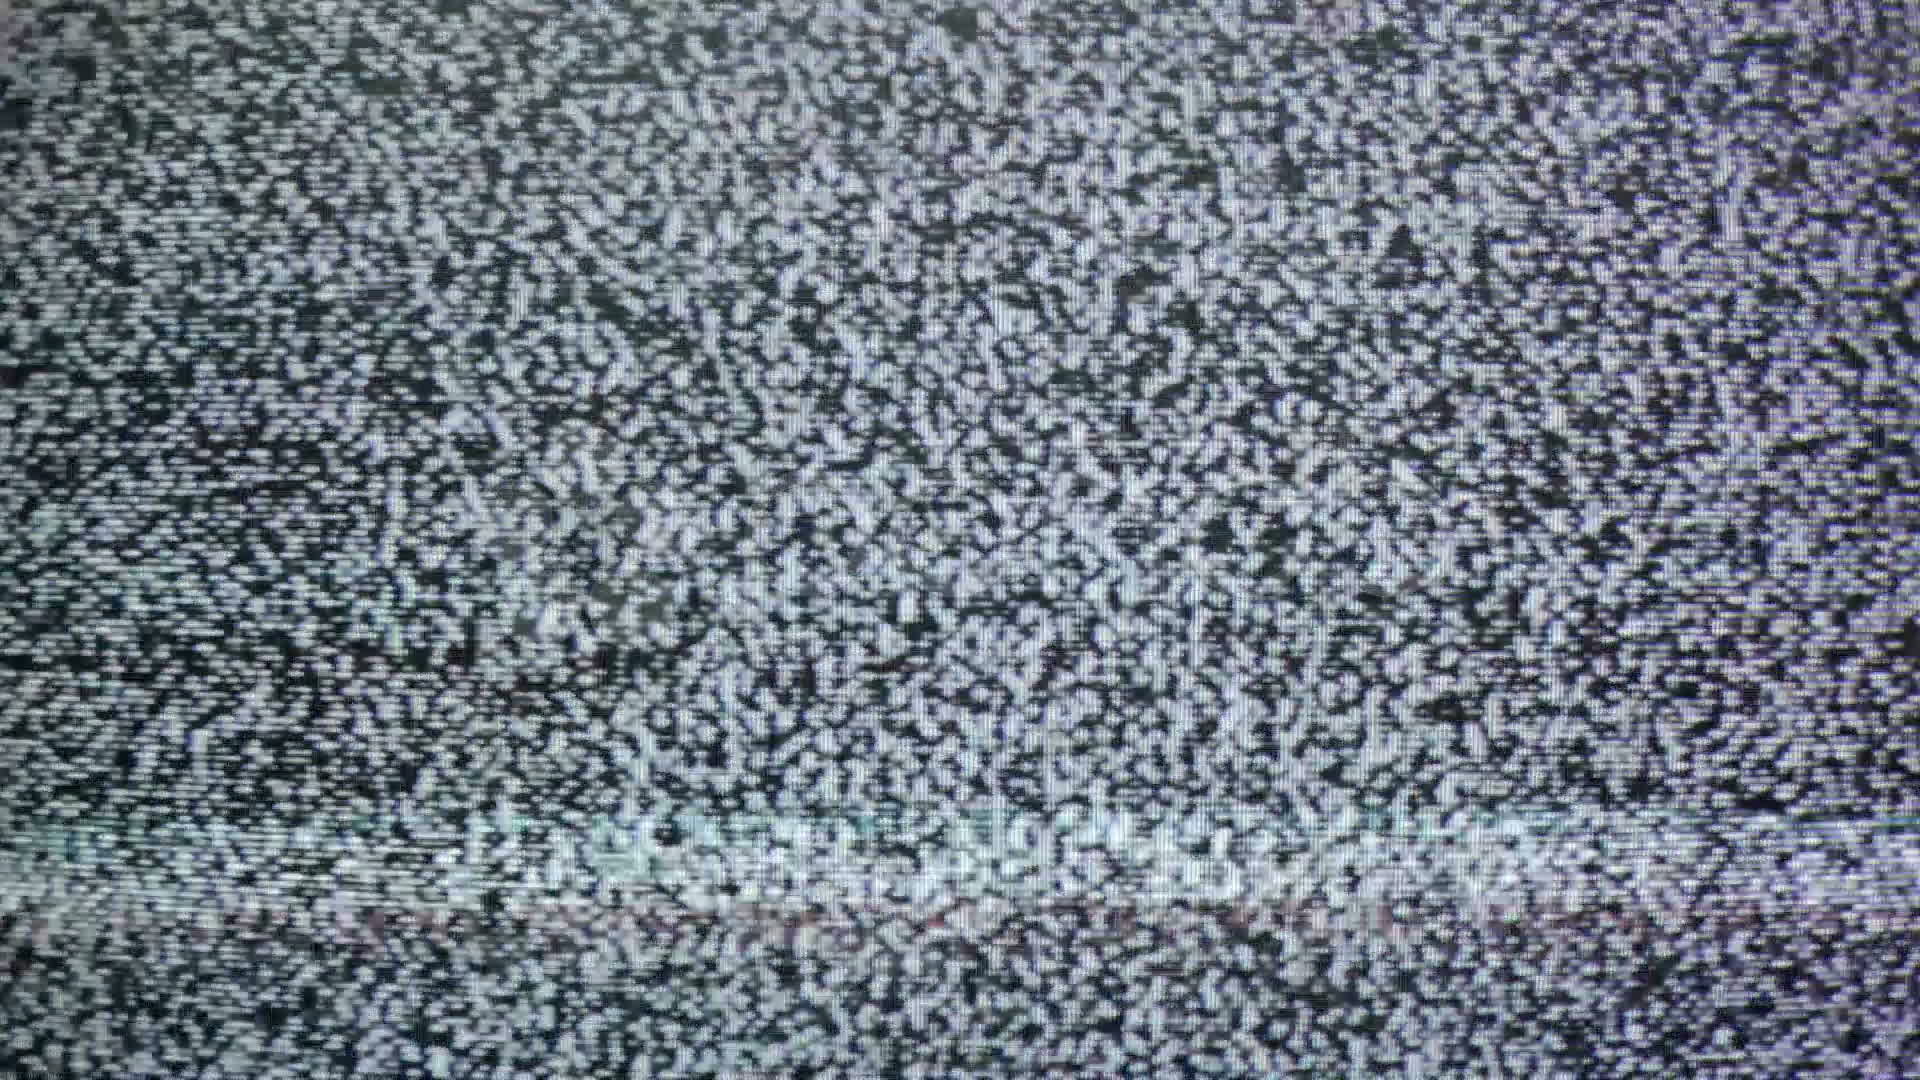 1920x1080 Get free high quality HD wallpapers broken tv screen wallpaper hd